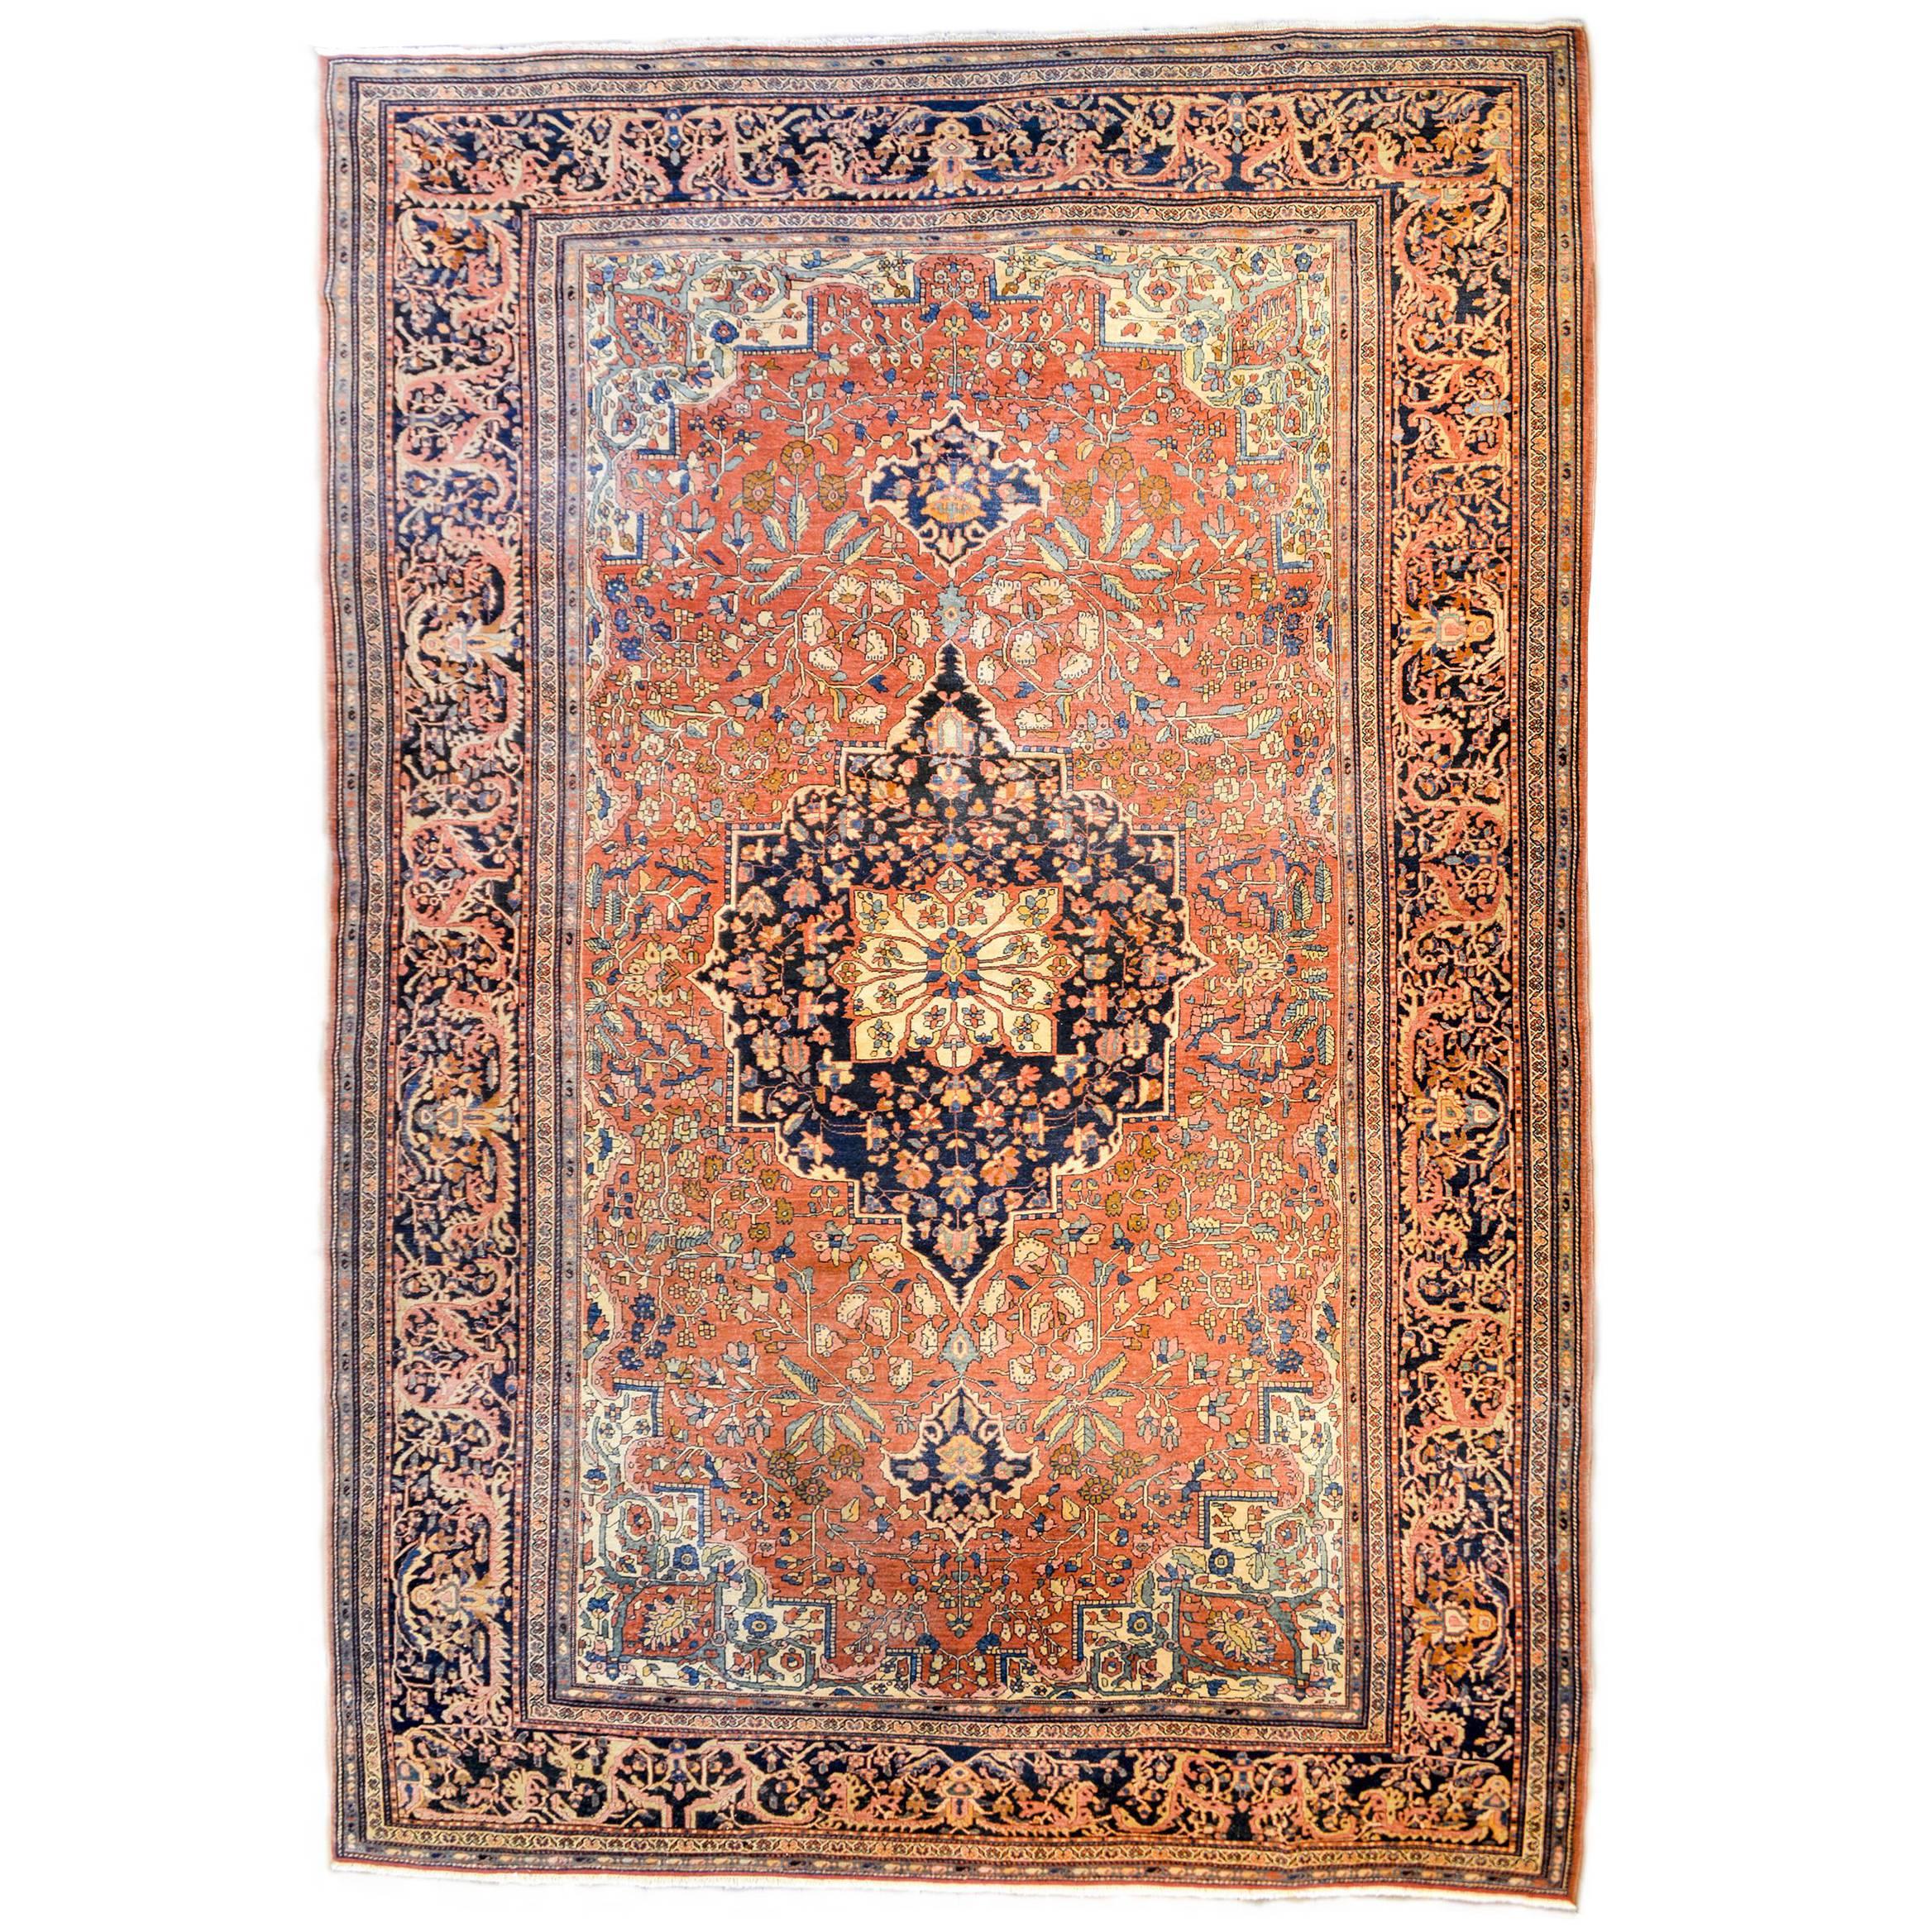 Extraordinaire tapis Sarouk Farahan du 19ème siècle